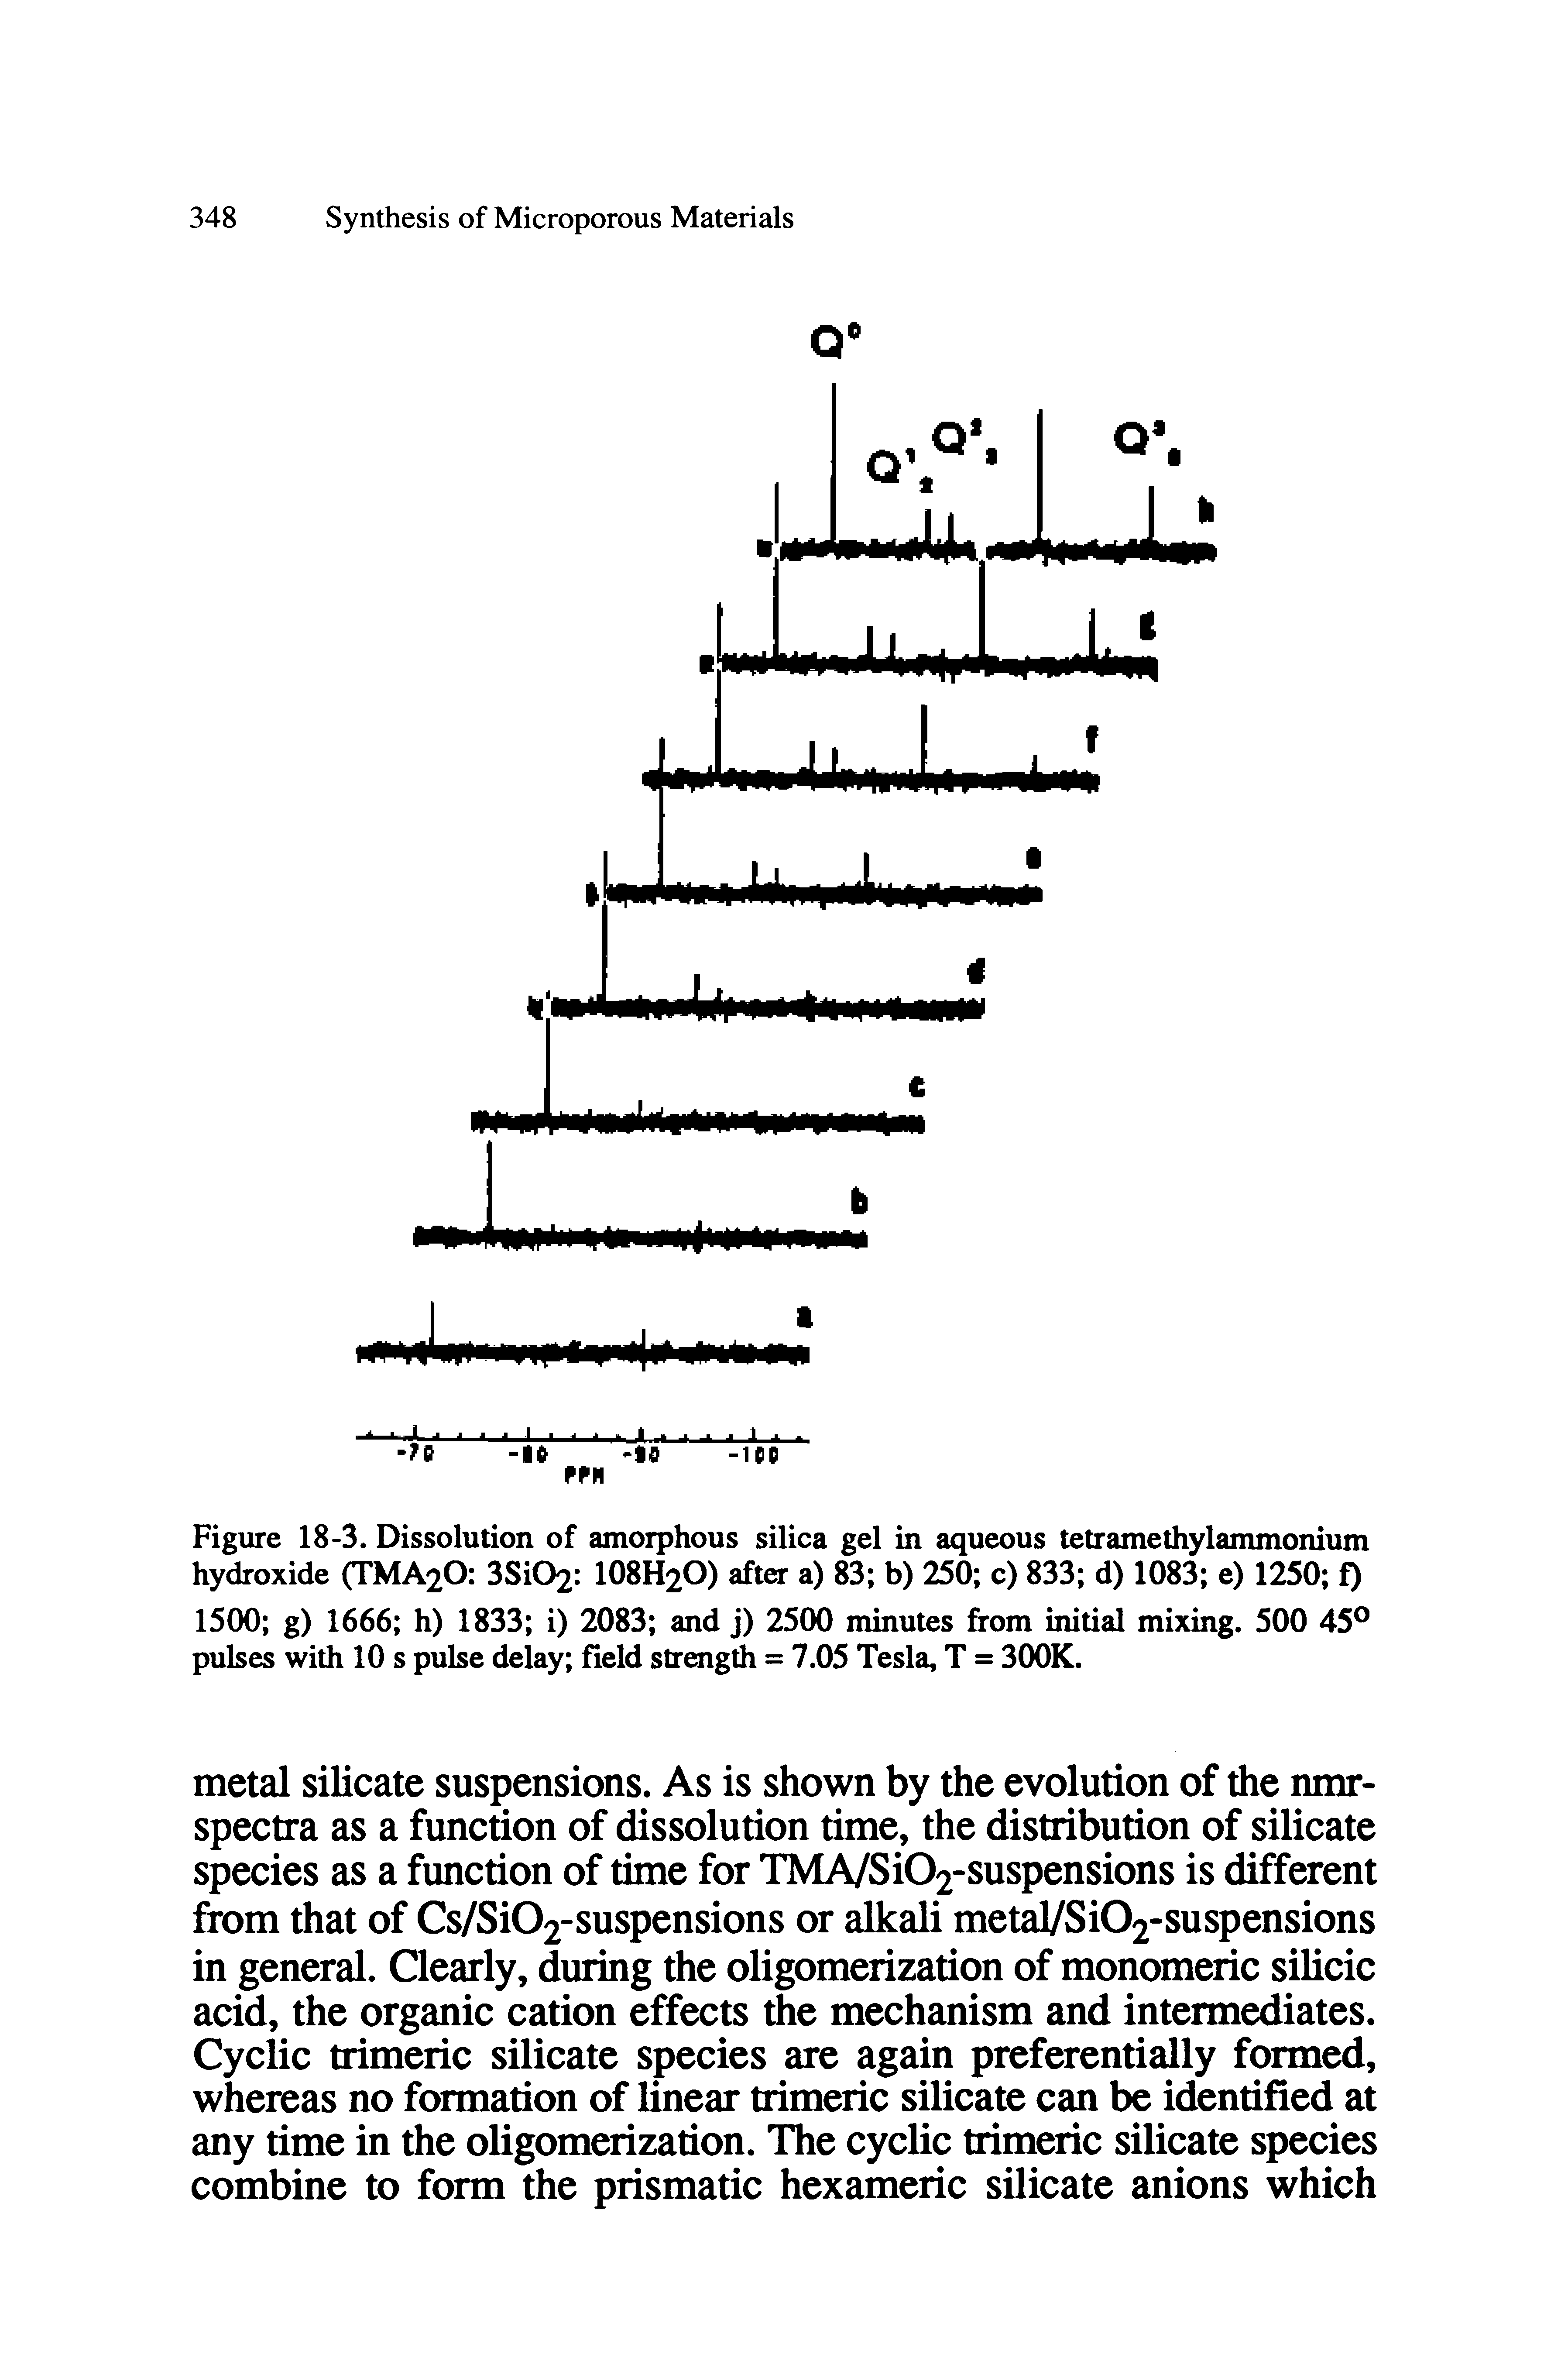 Figure 18-3. Dissolution of amorphous silica gel in aqueous tetramethylammonium hydroxide (TMA2O 3Si02 IO8H2O) after a) 83 b) 250 c) 833 d) 1083 e) 1250 f)...